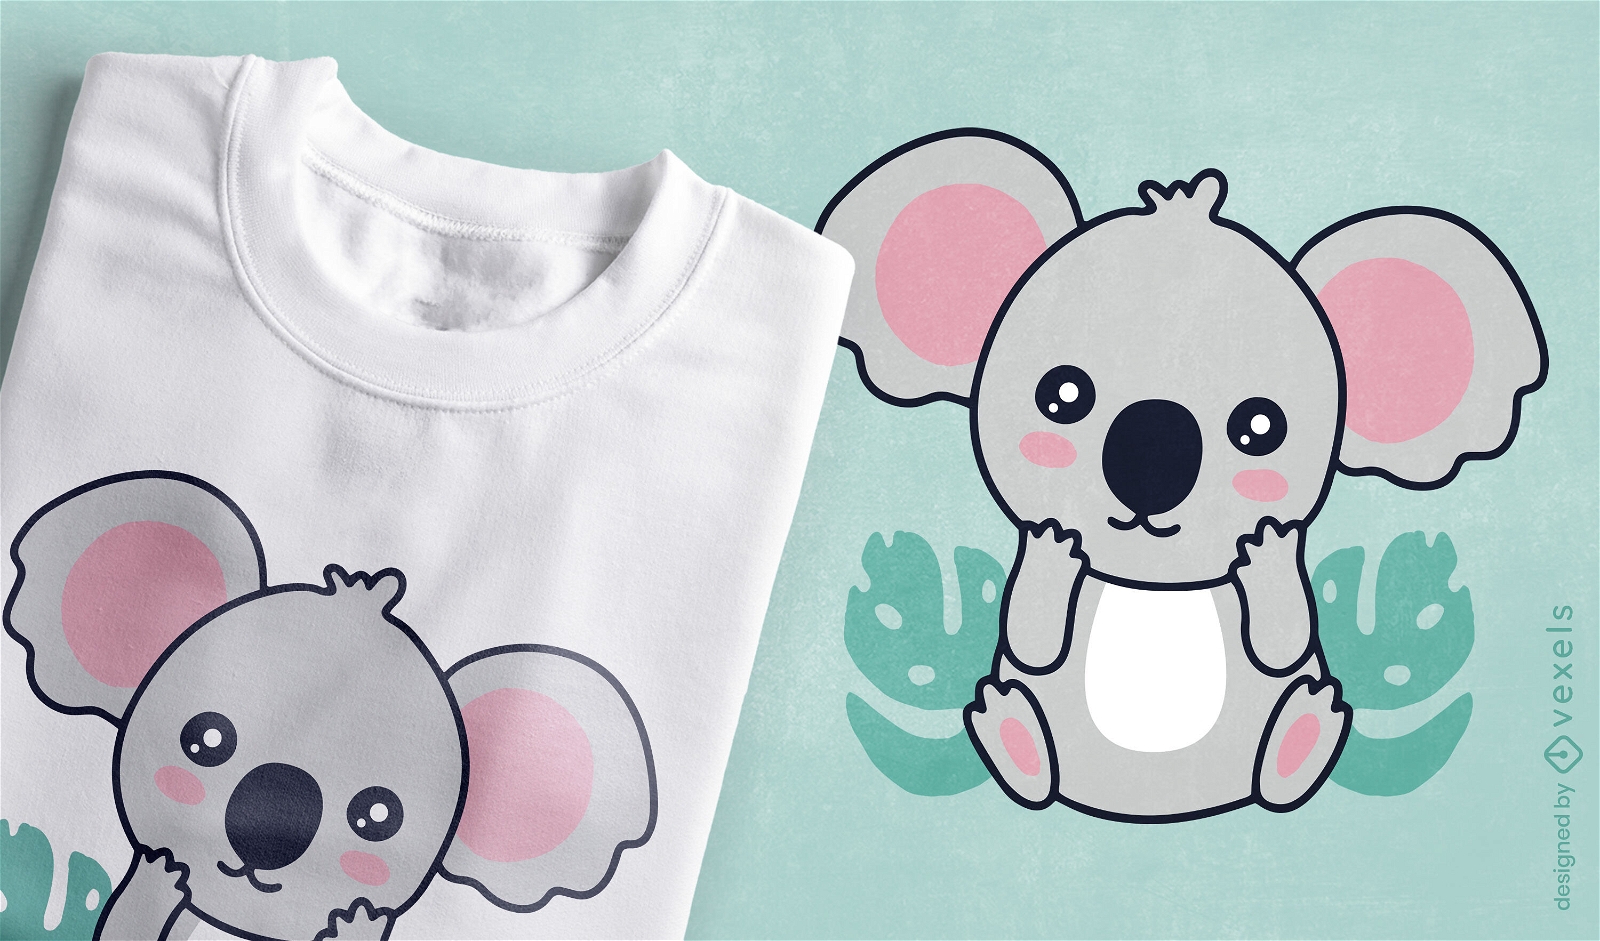 Cute koala baby animal t-shirt design